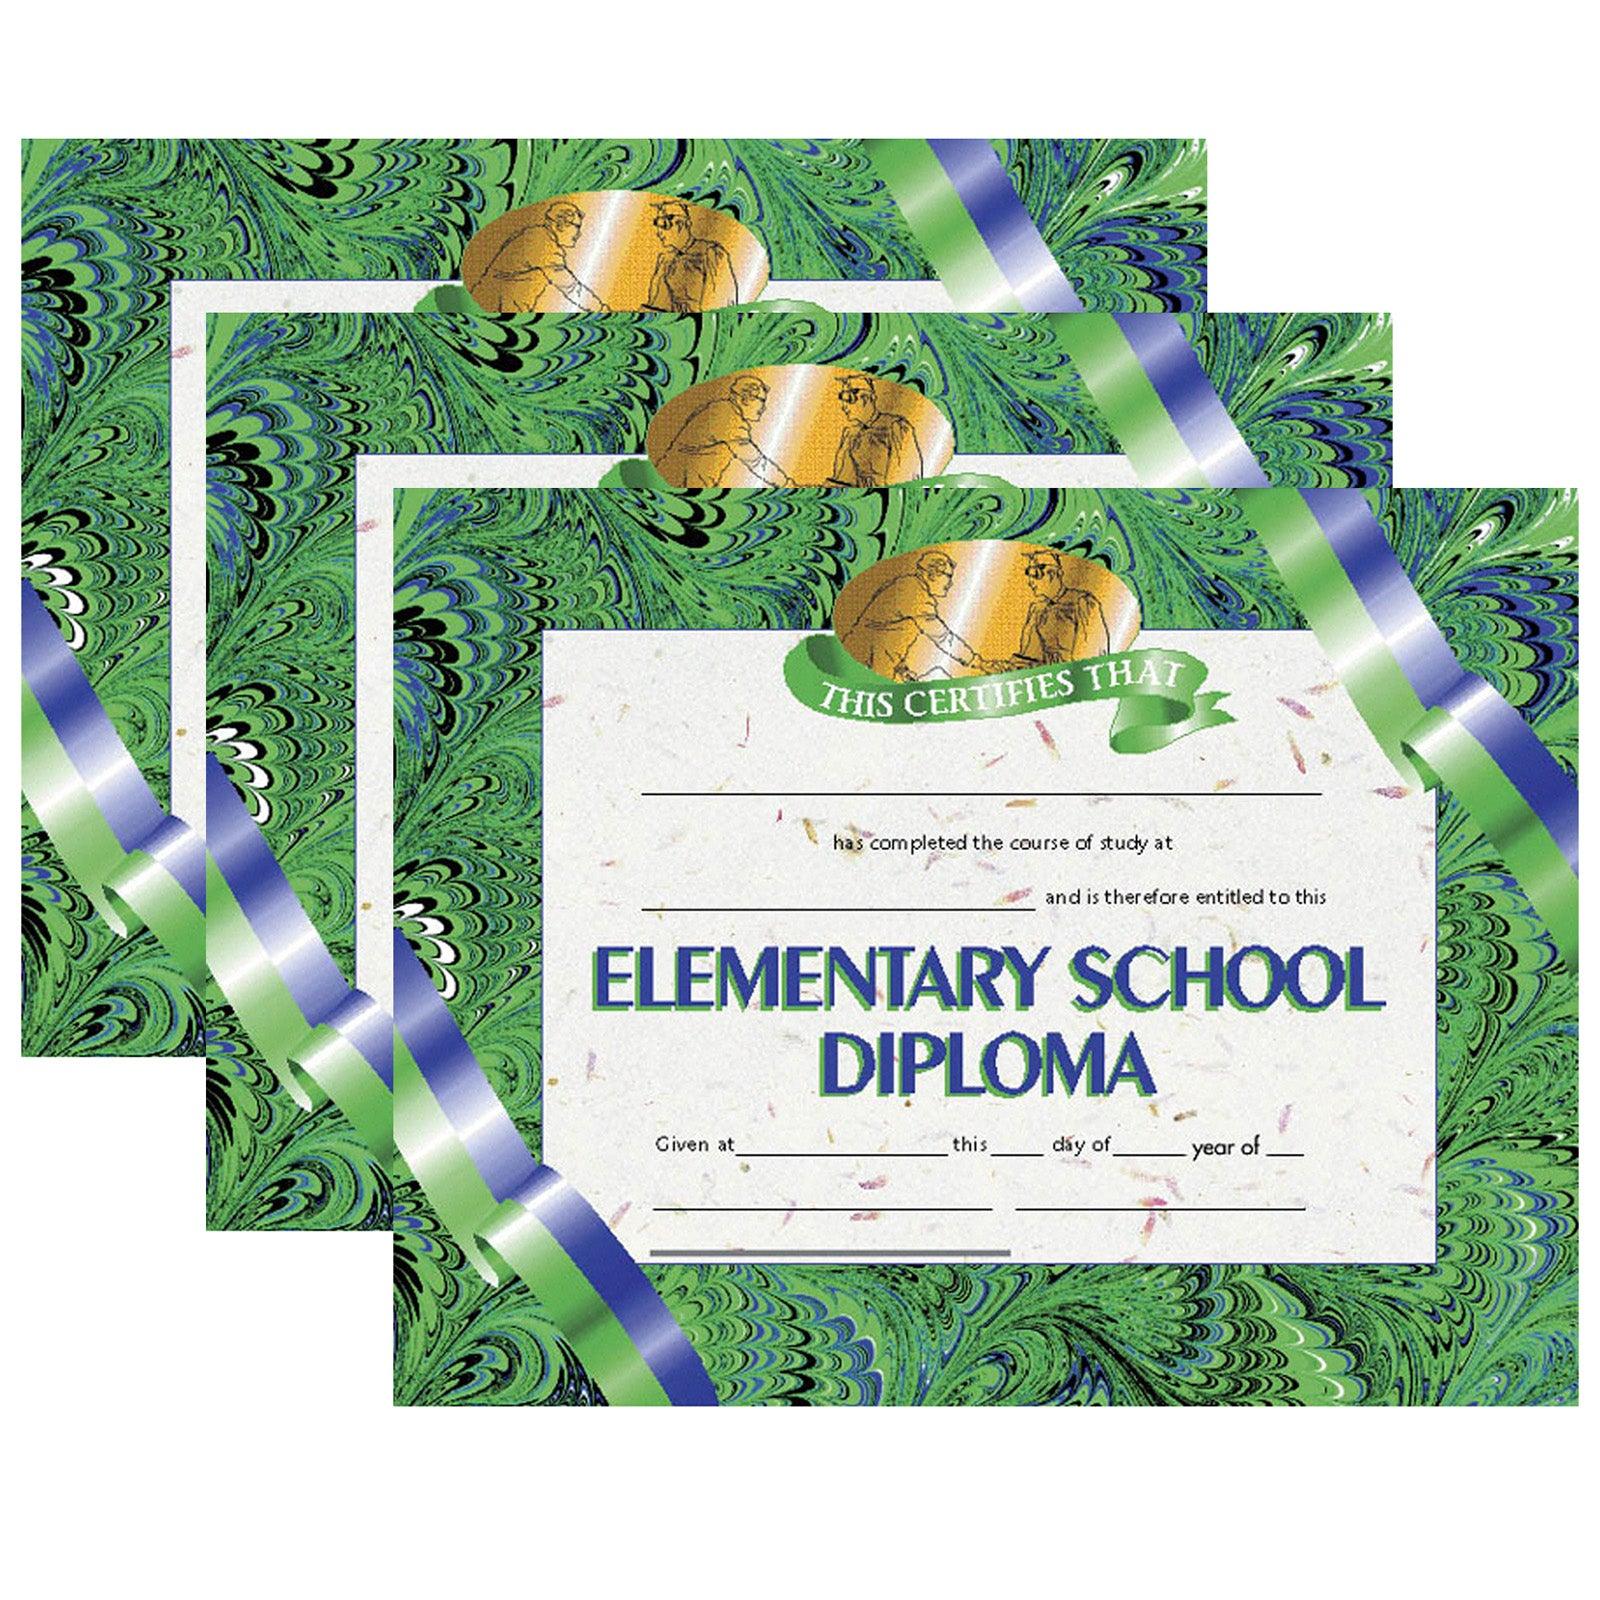 Elementary School Diploma, 8.5" x 11", 30 Per Pack, 3 Packs - Loomini